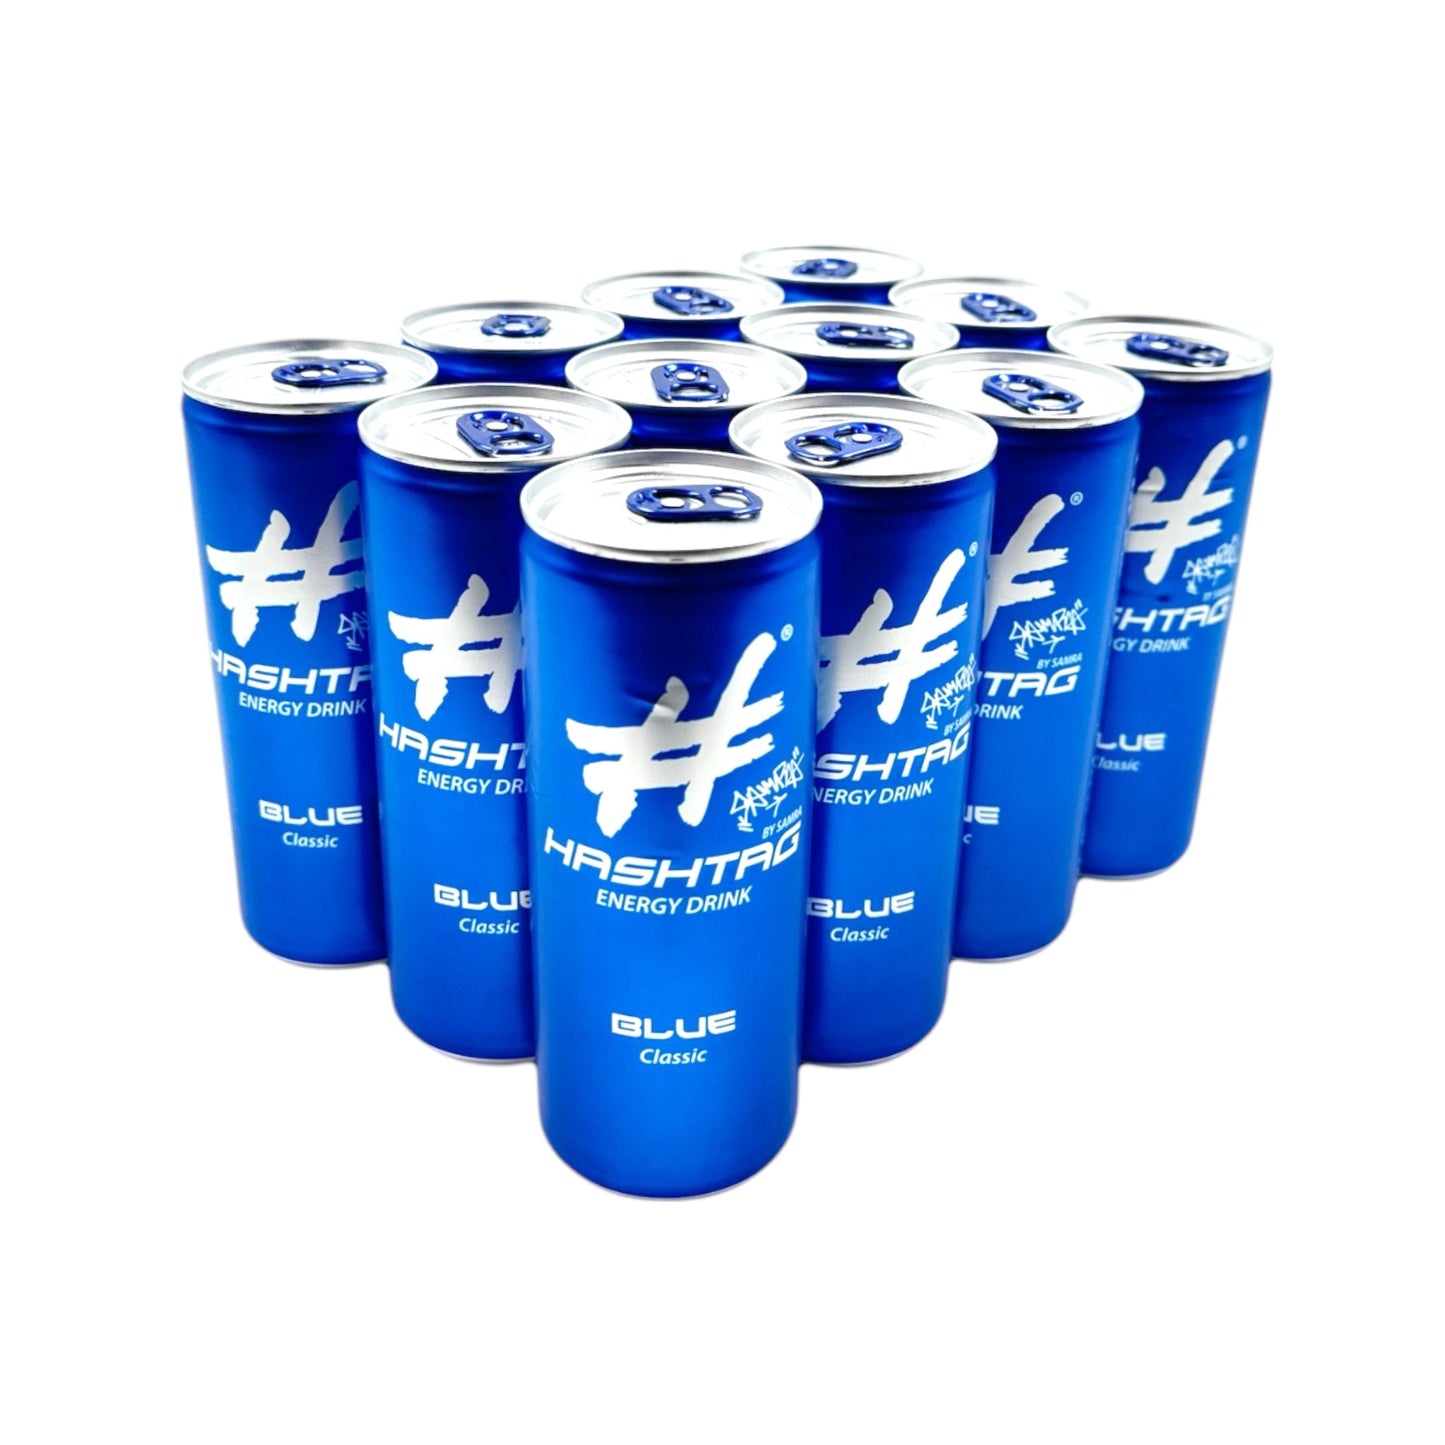 Hashtag Blue Energy Drink Classic 250ml